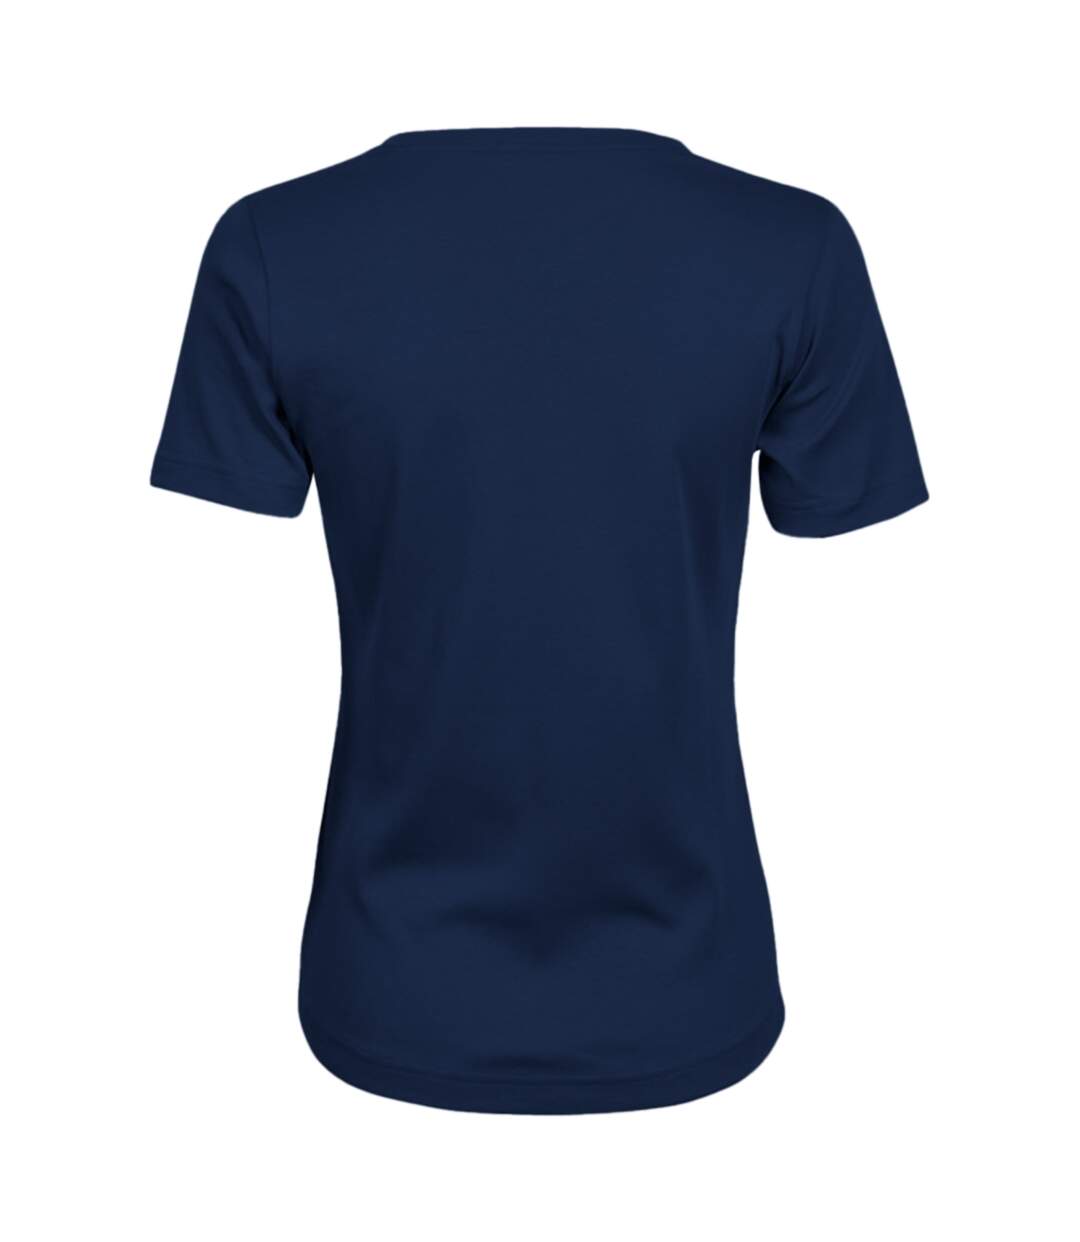 Tee Jays Womens/Ladies Interlock Short Sleeve T-Shirt (Navy Blue)